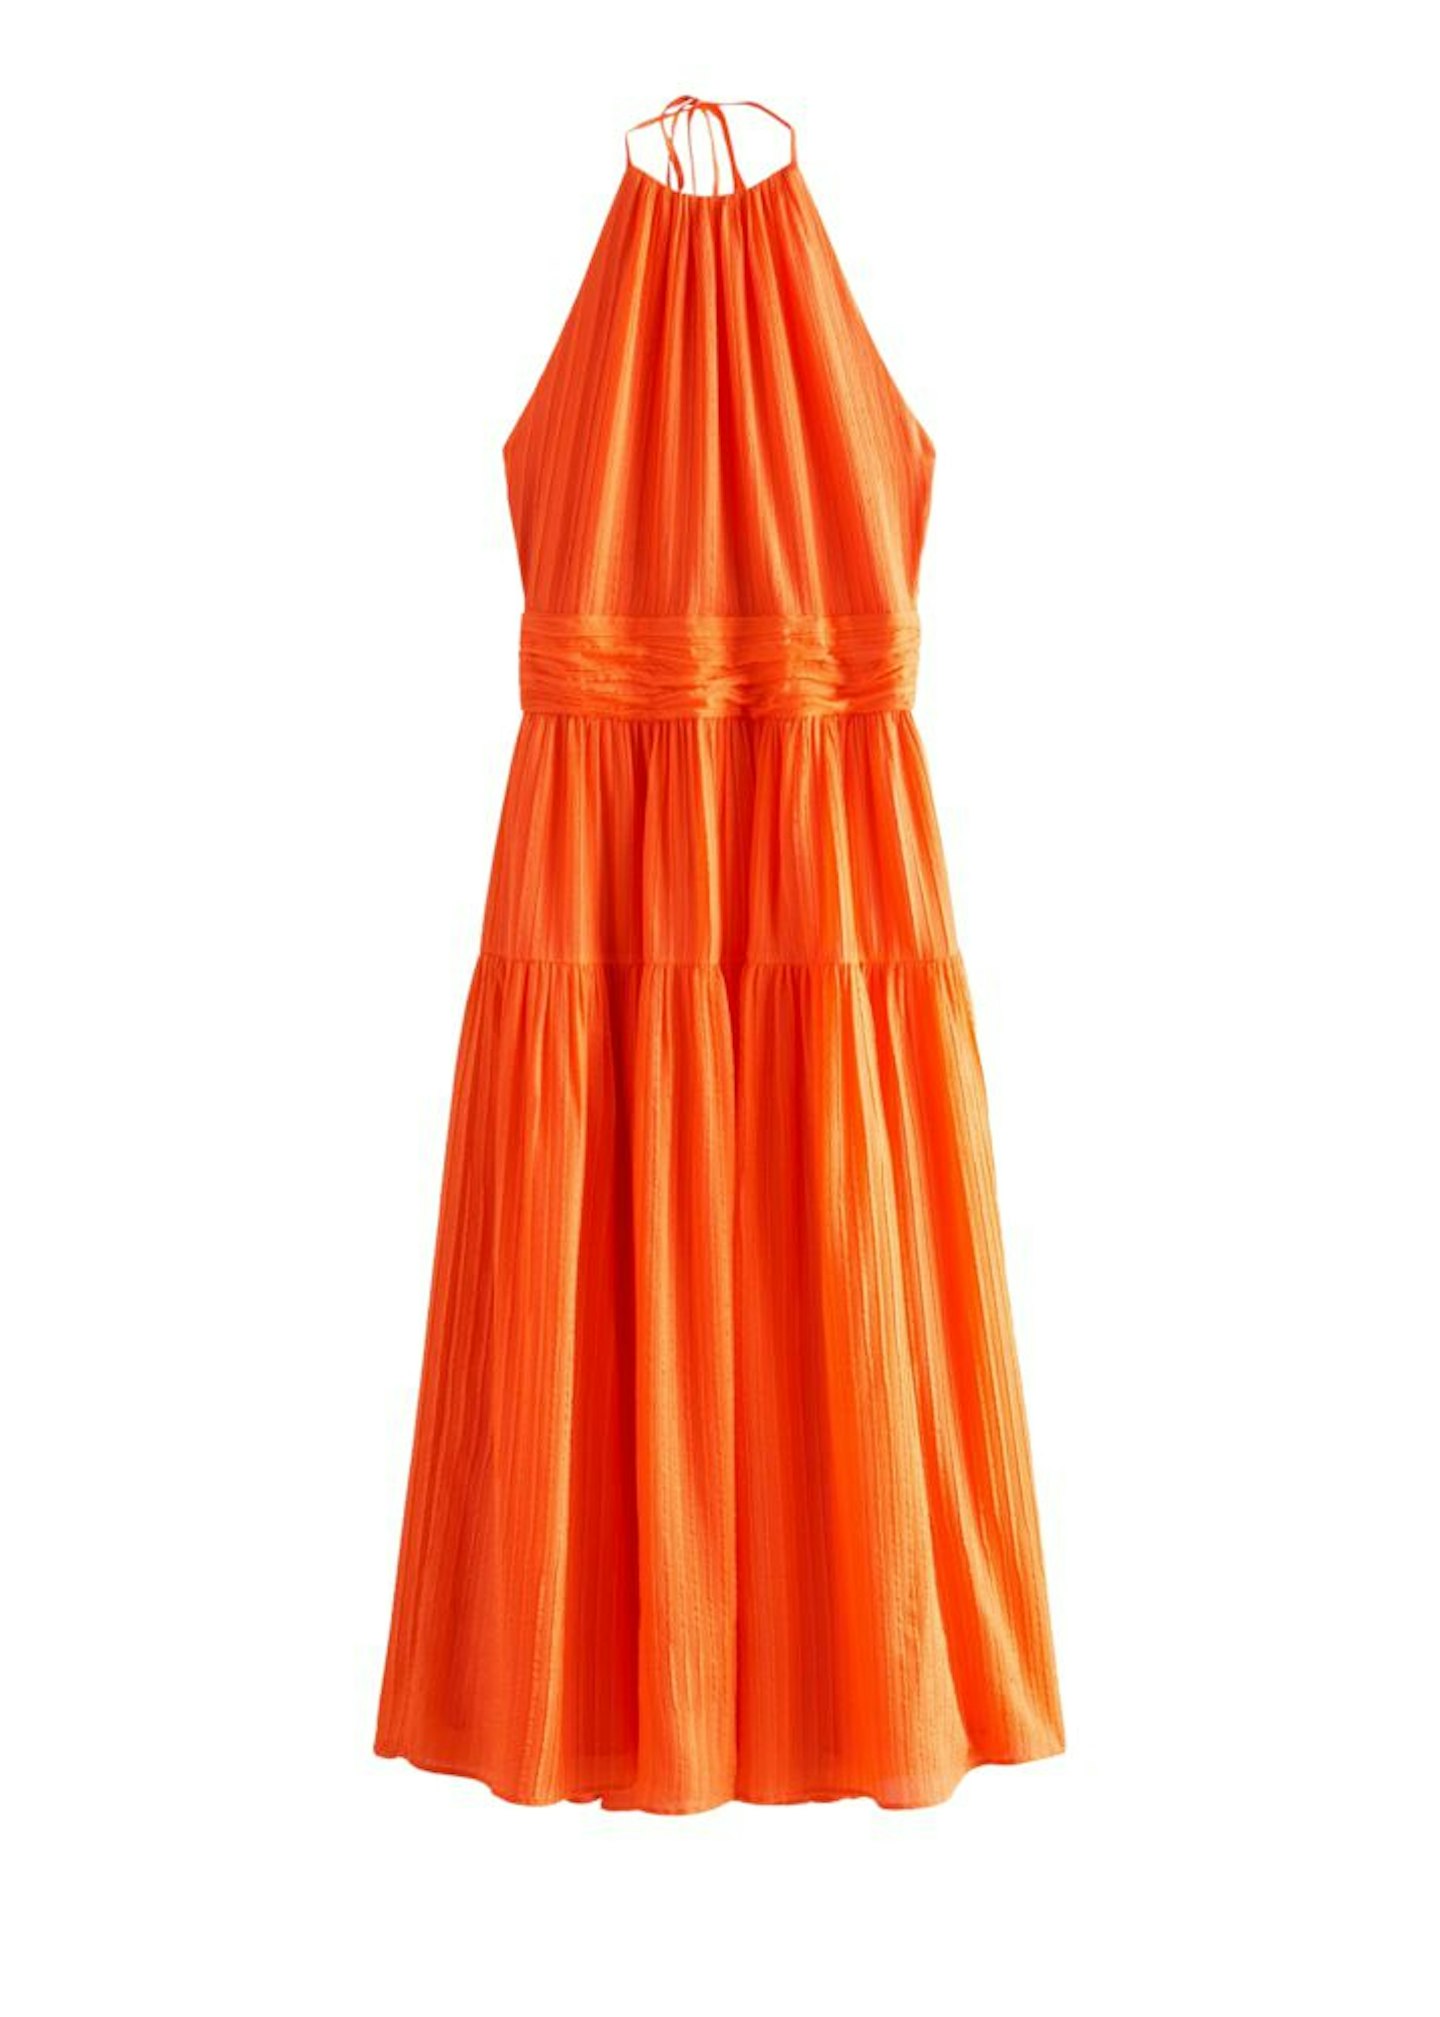 Rejina Pyo & Other Stories, Orange Dress, £165